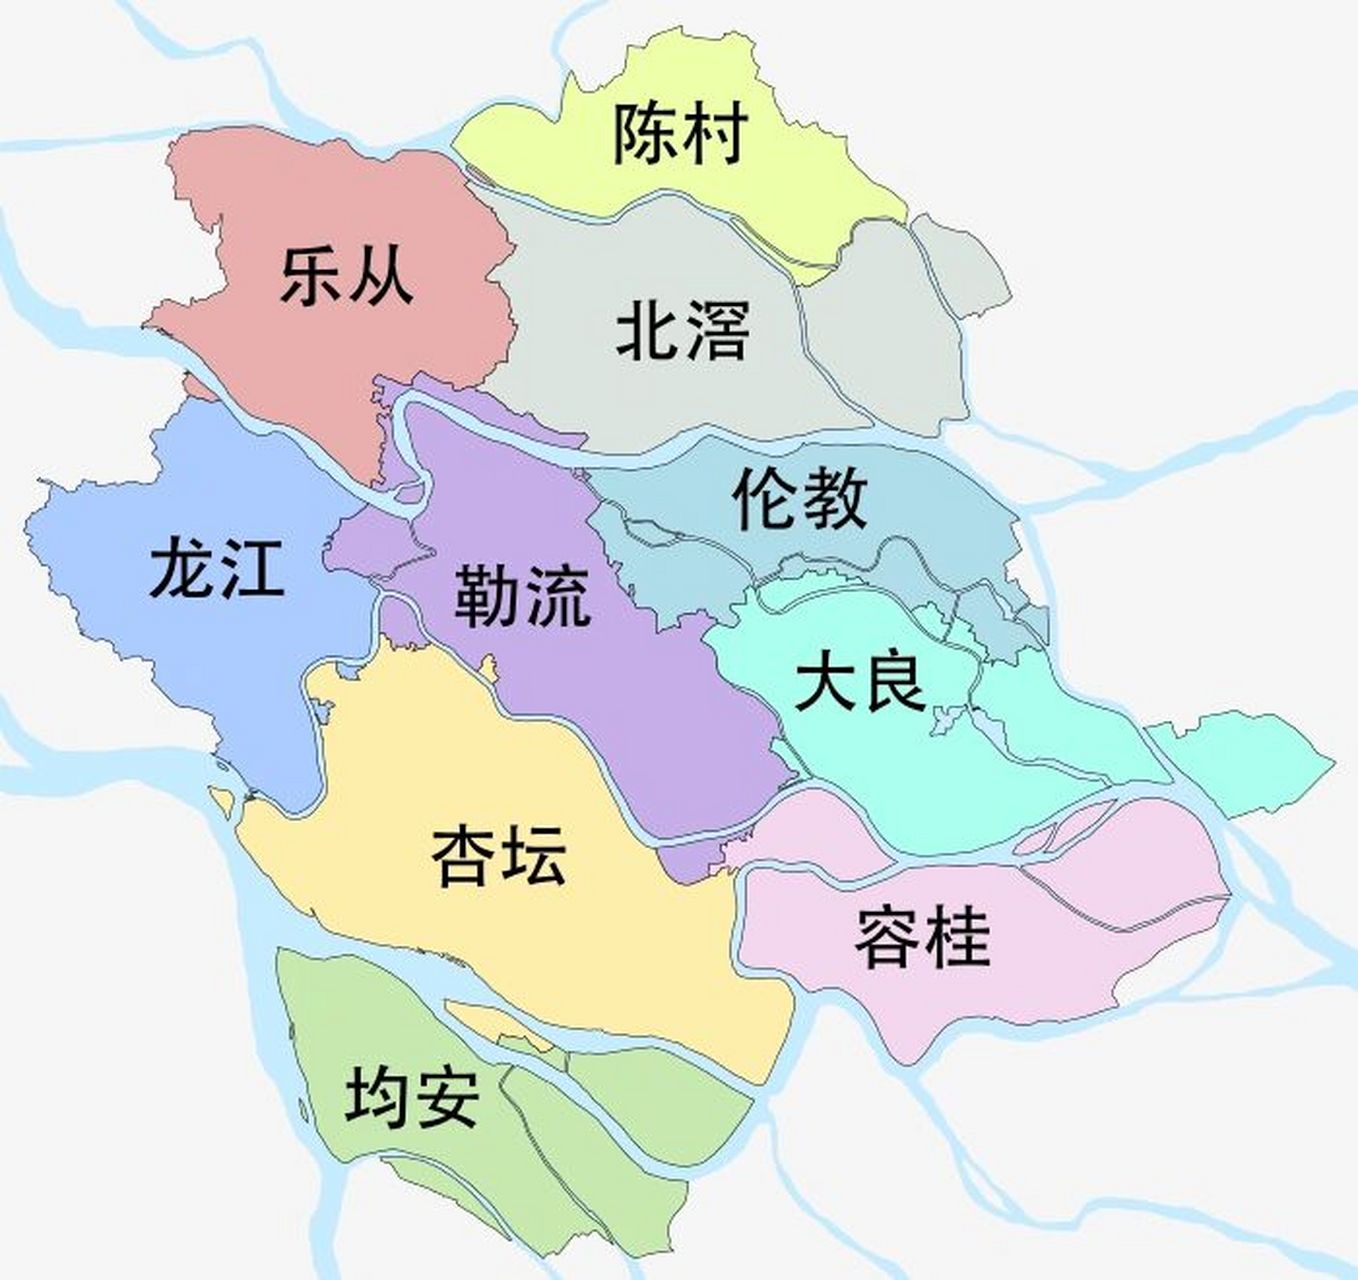 广东佛山地图镇区划分图片